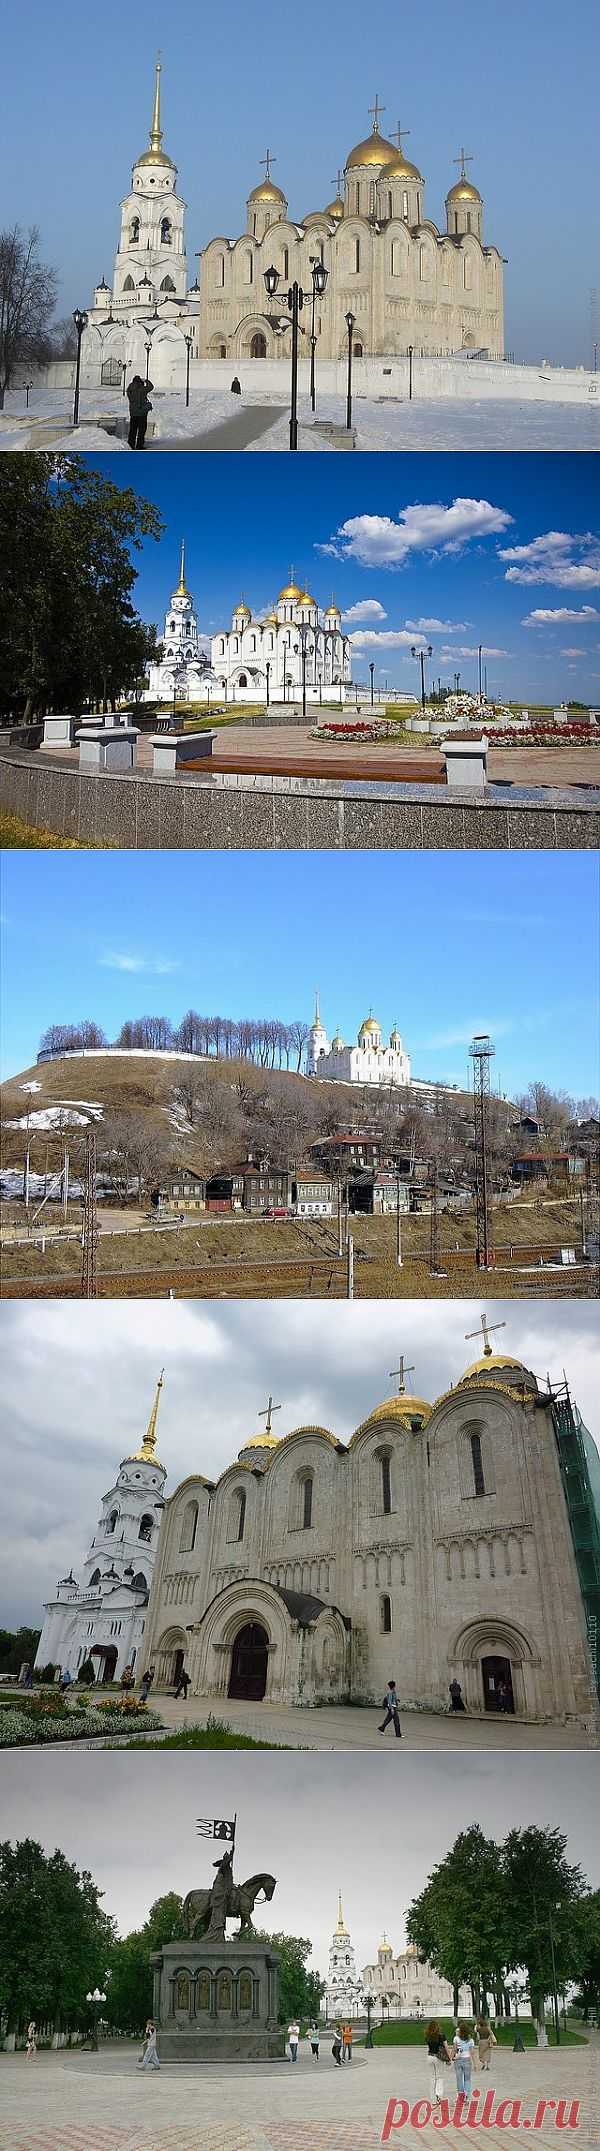 Успенский собор во Владимире, фото и описание собора